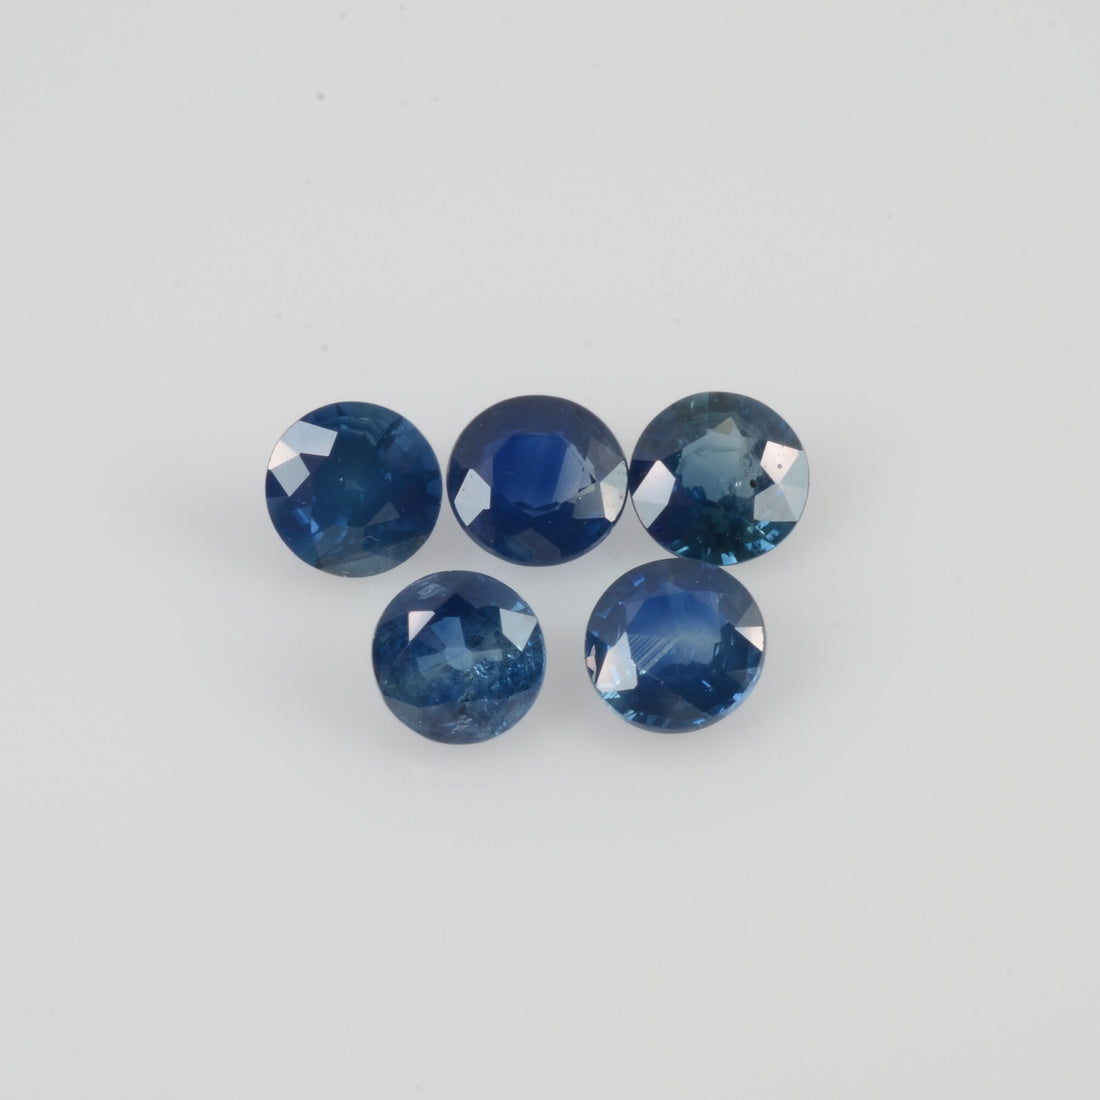 4.5 mm Natural Blue Sapphire Loose Gemstone Round Cut